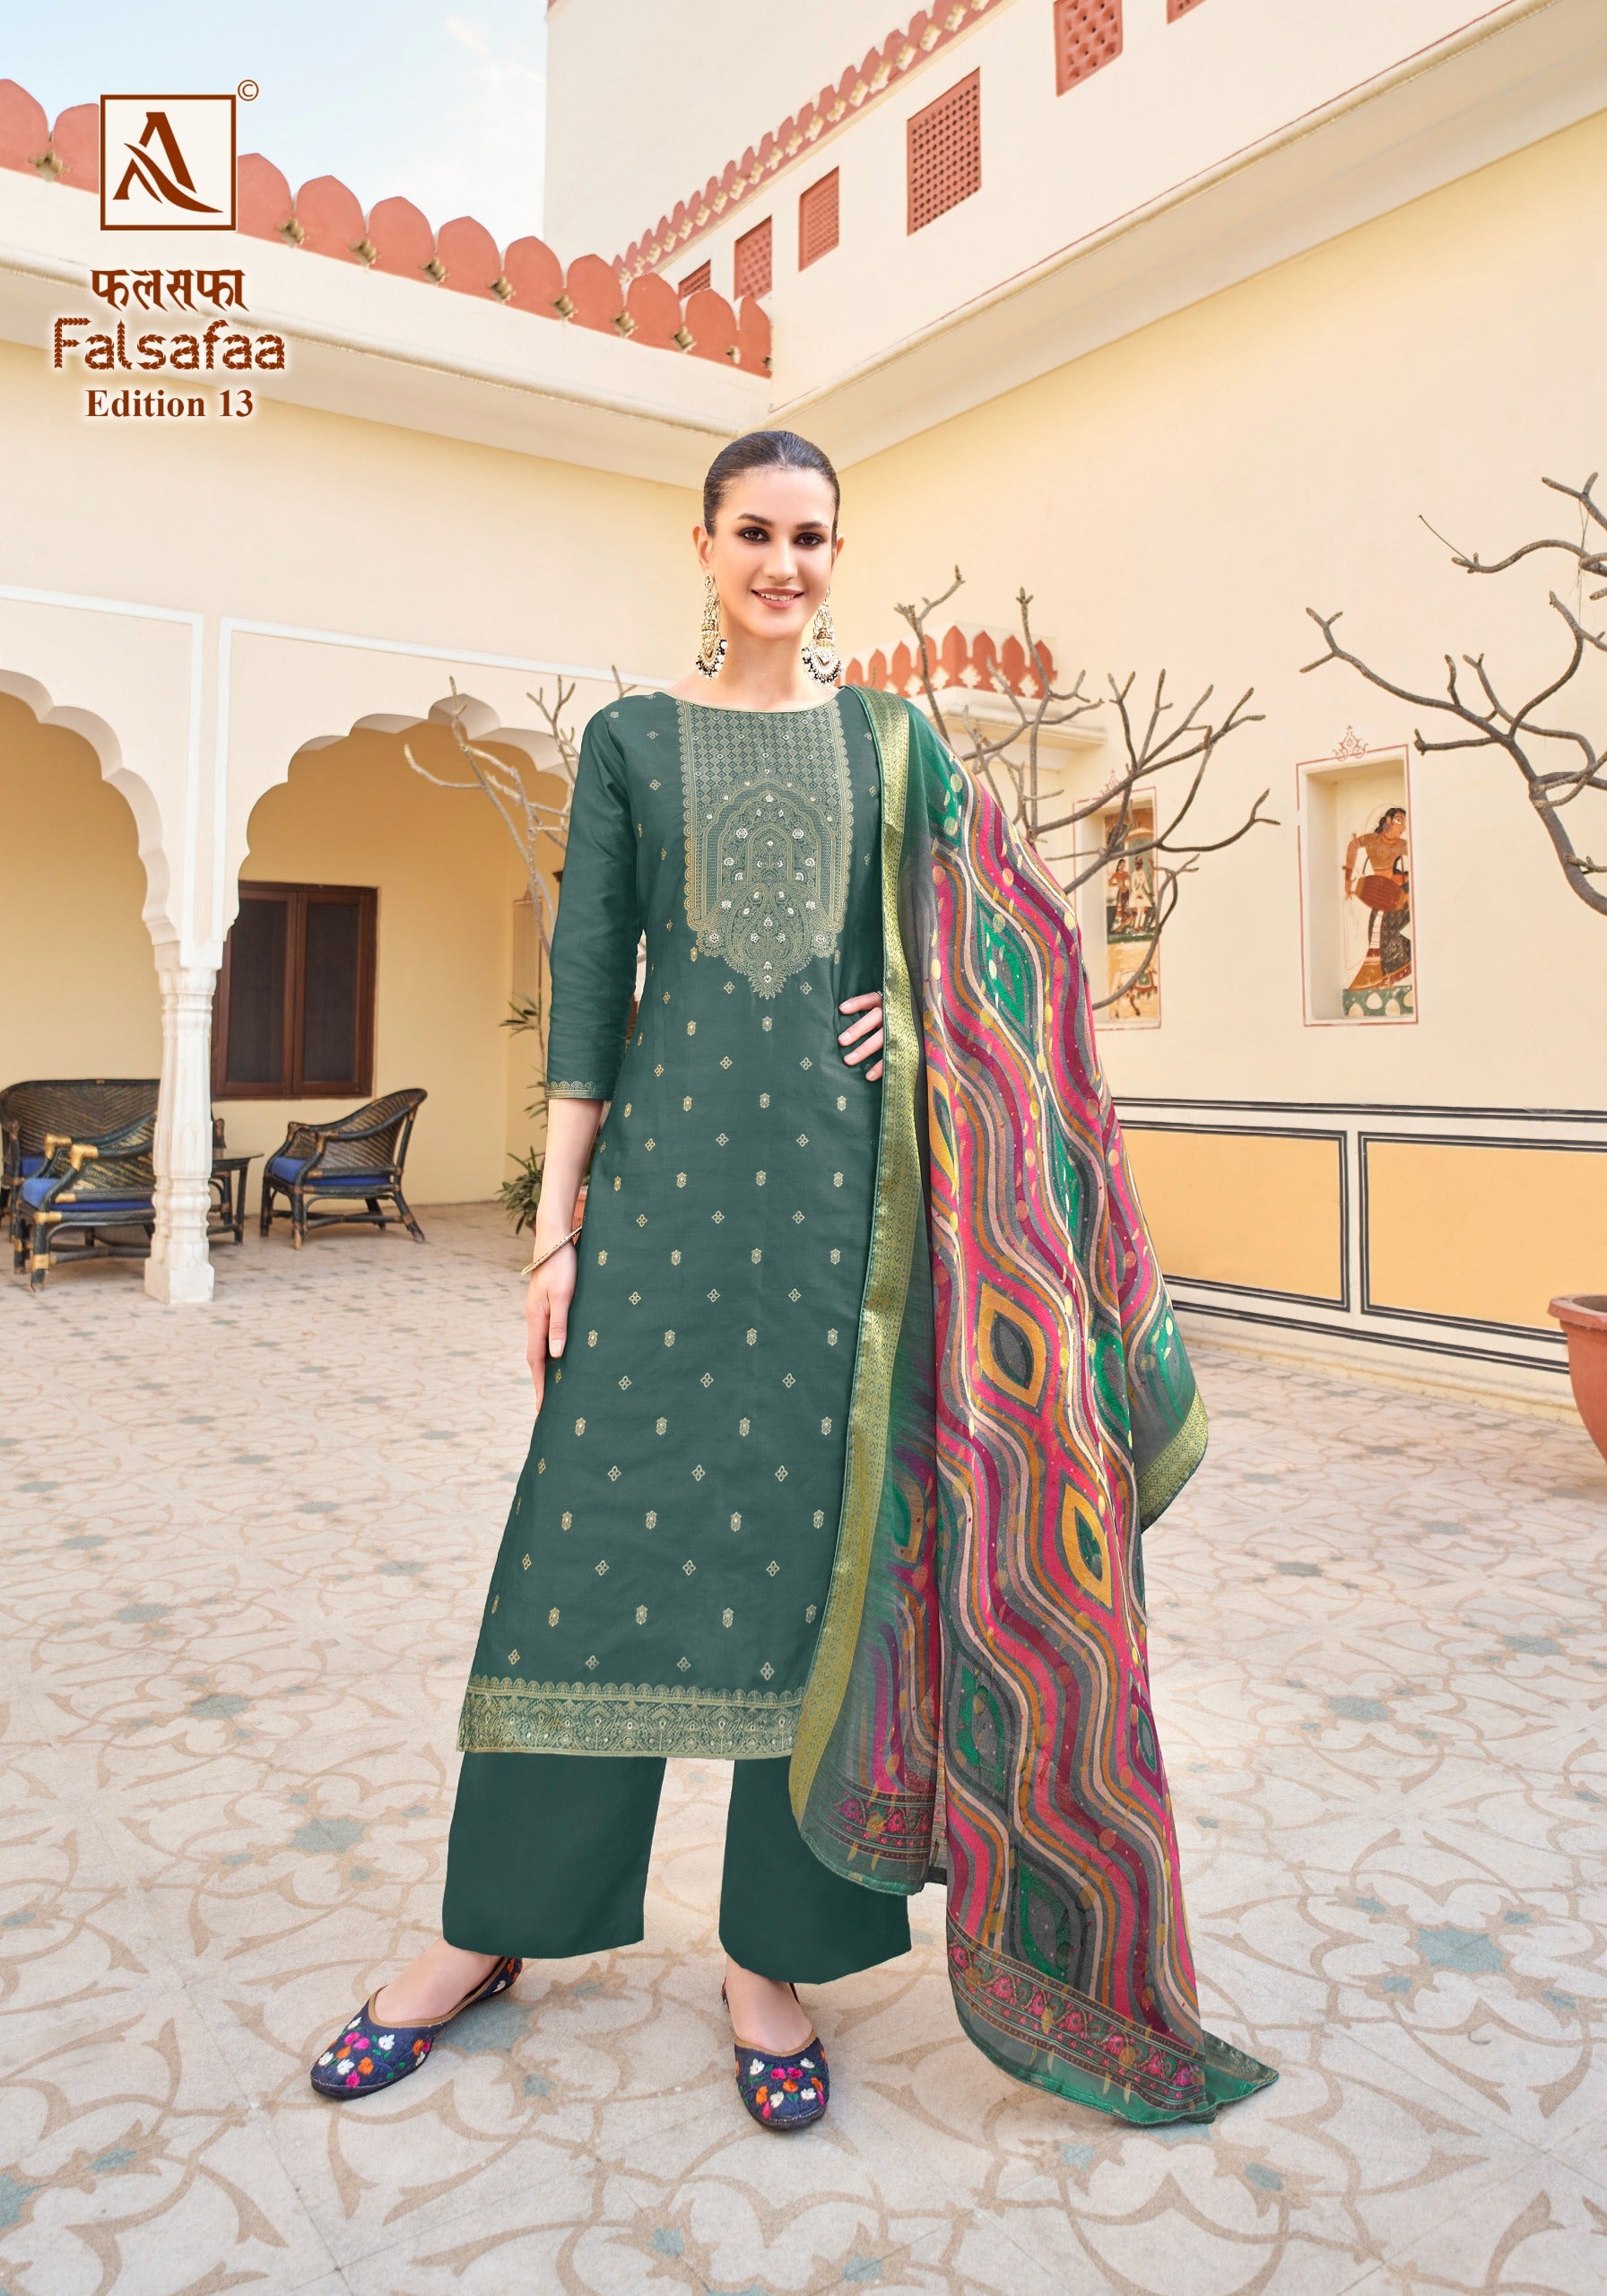 Alok Suit Falsafaa Vol 13 Dola Jacquard With Embroidery Work Salwar Suit Latest Suit Design